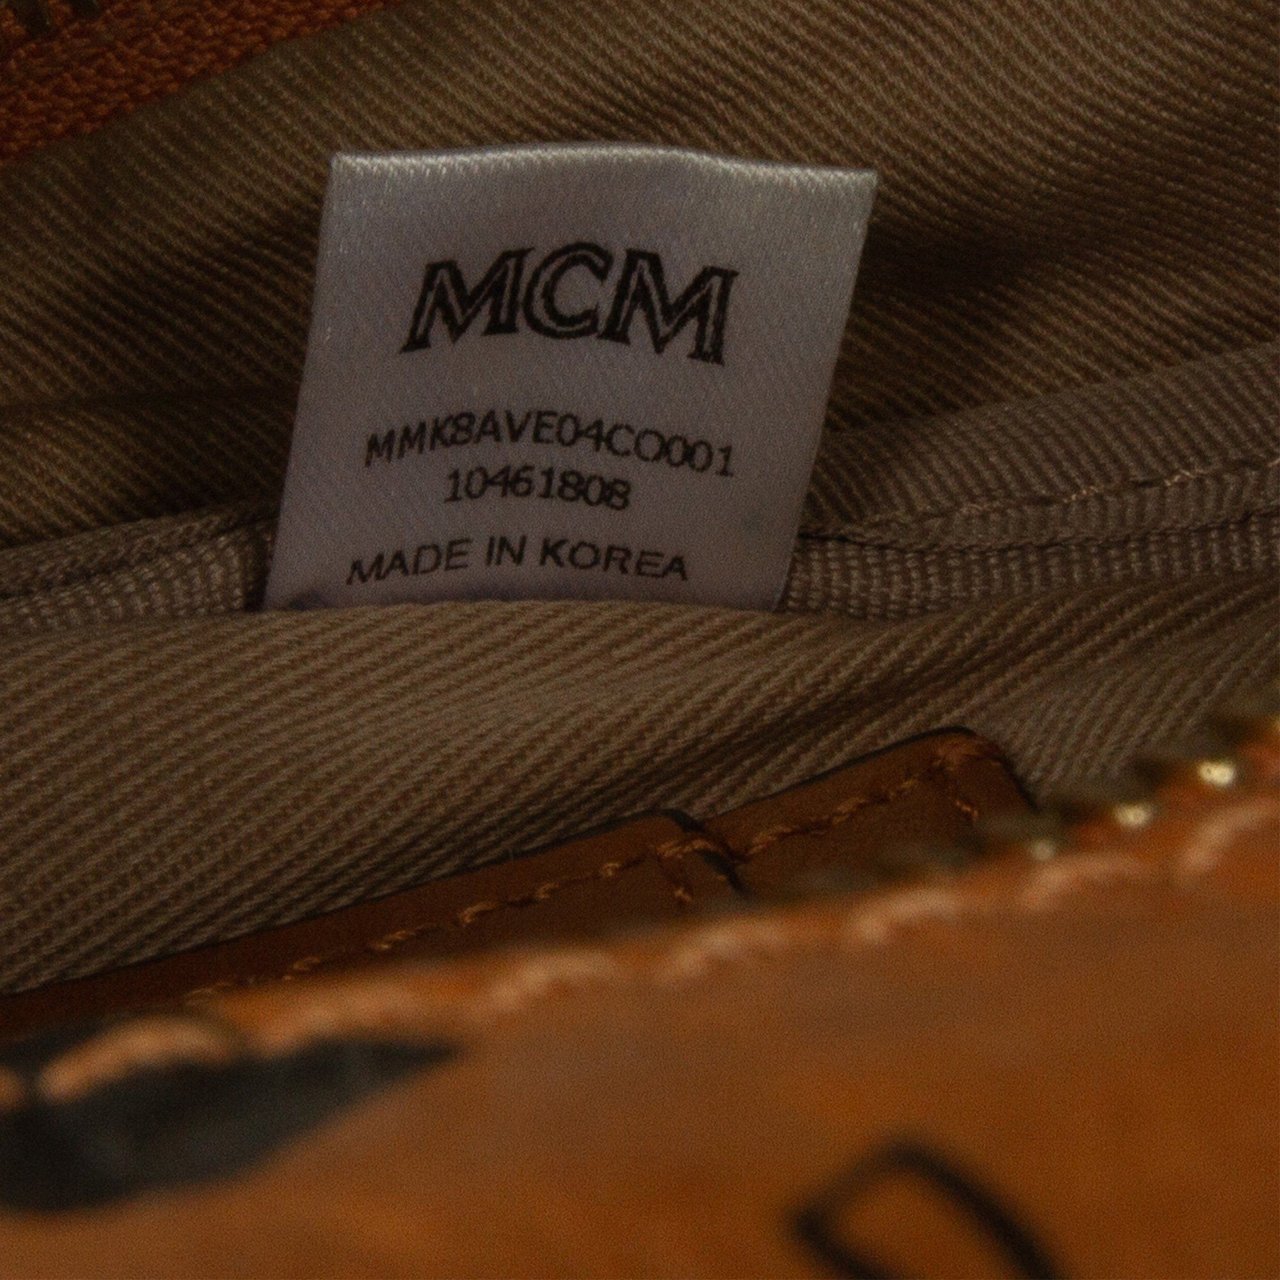 MCM Mini Visetos Stark Backpack Bruin